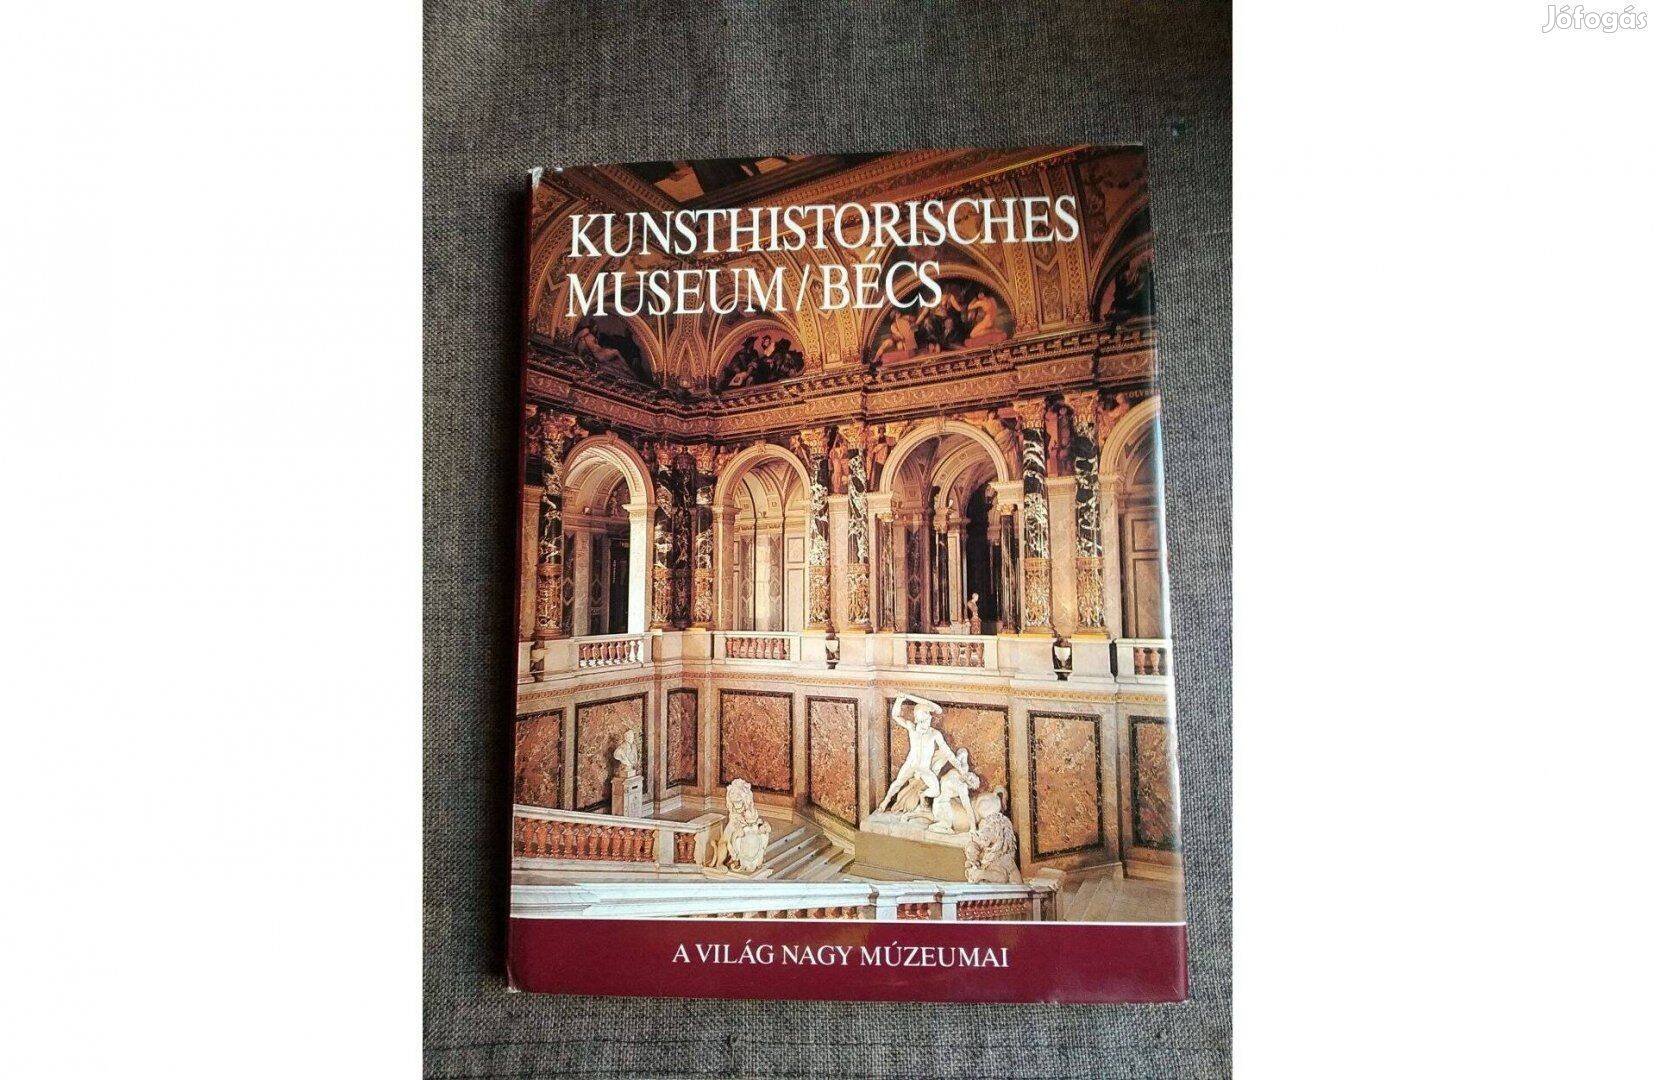 Kunsthistorisches Museum/Bécs (a világ nagy múzeumai) Georg J. Kugler